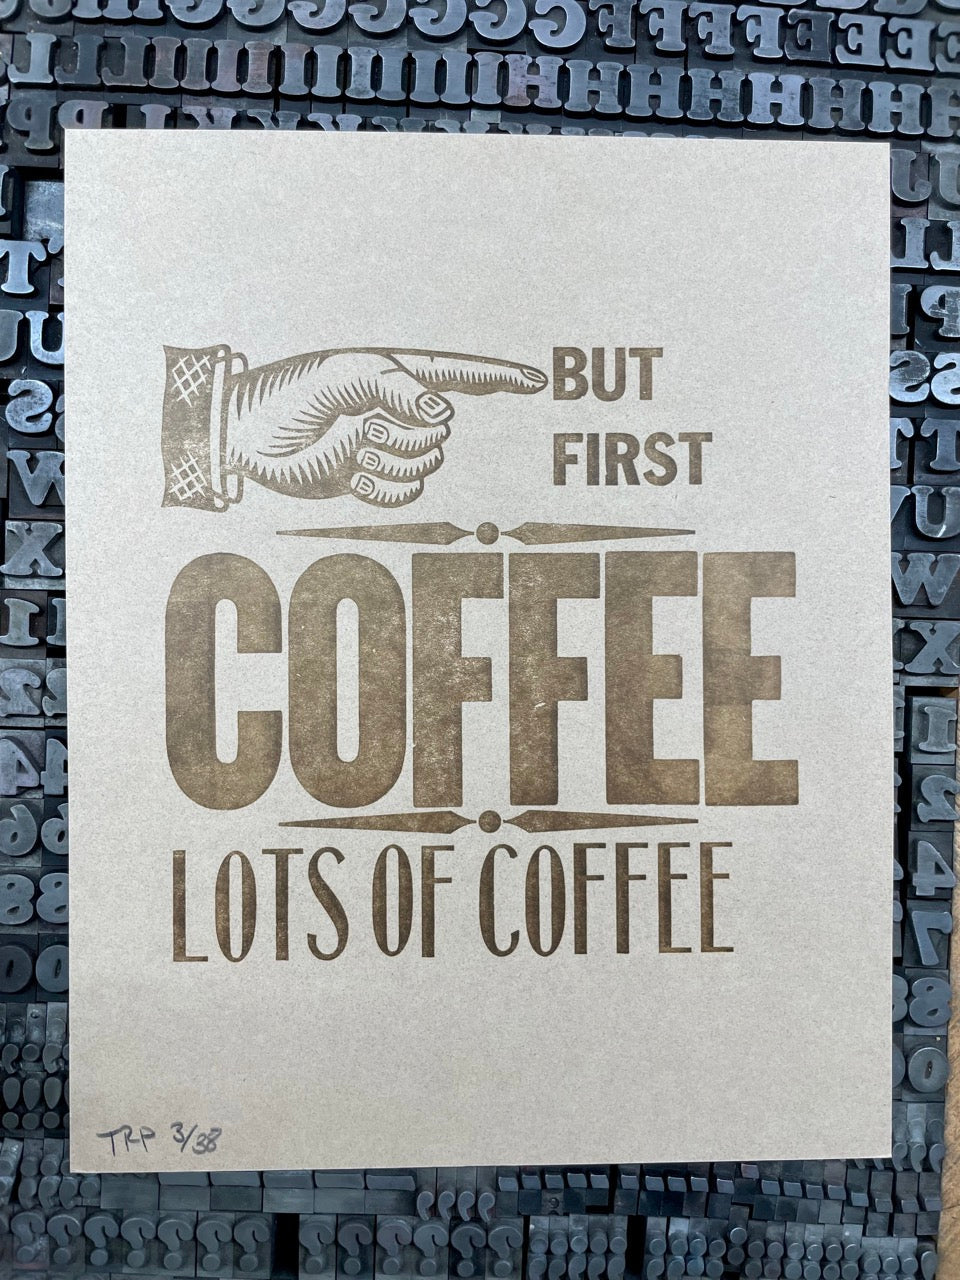 But First Coffee x10 Letterpress print on brow kraft paper